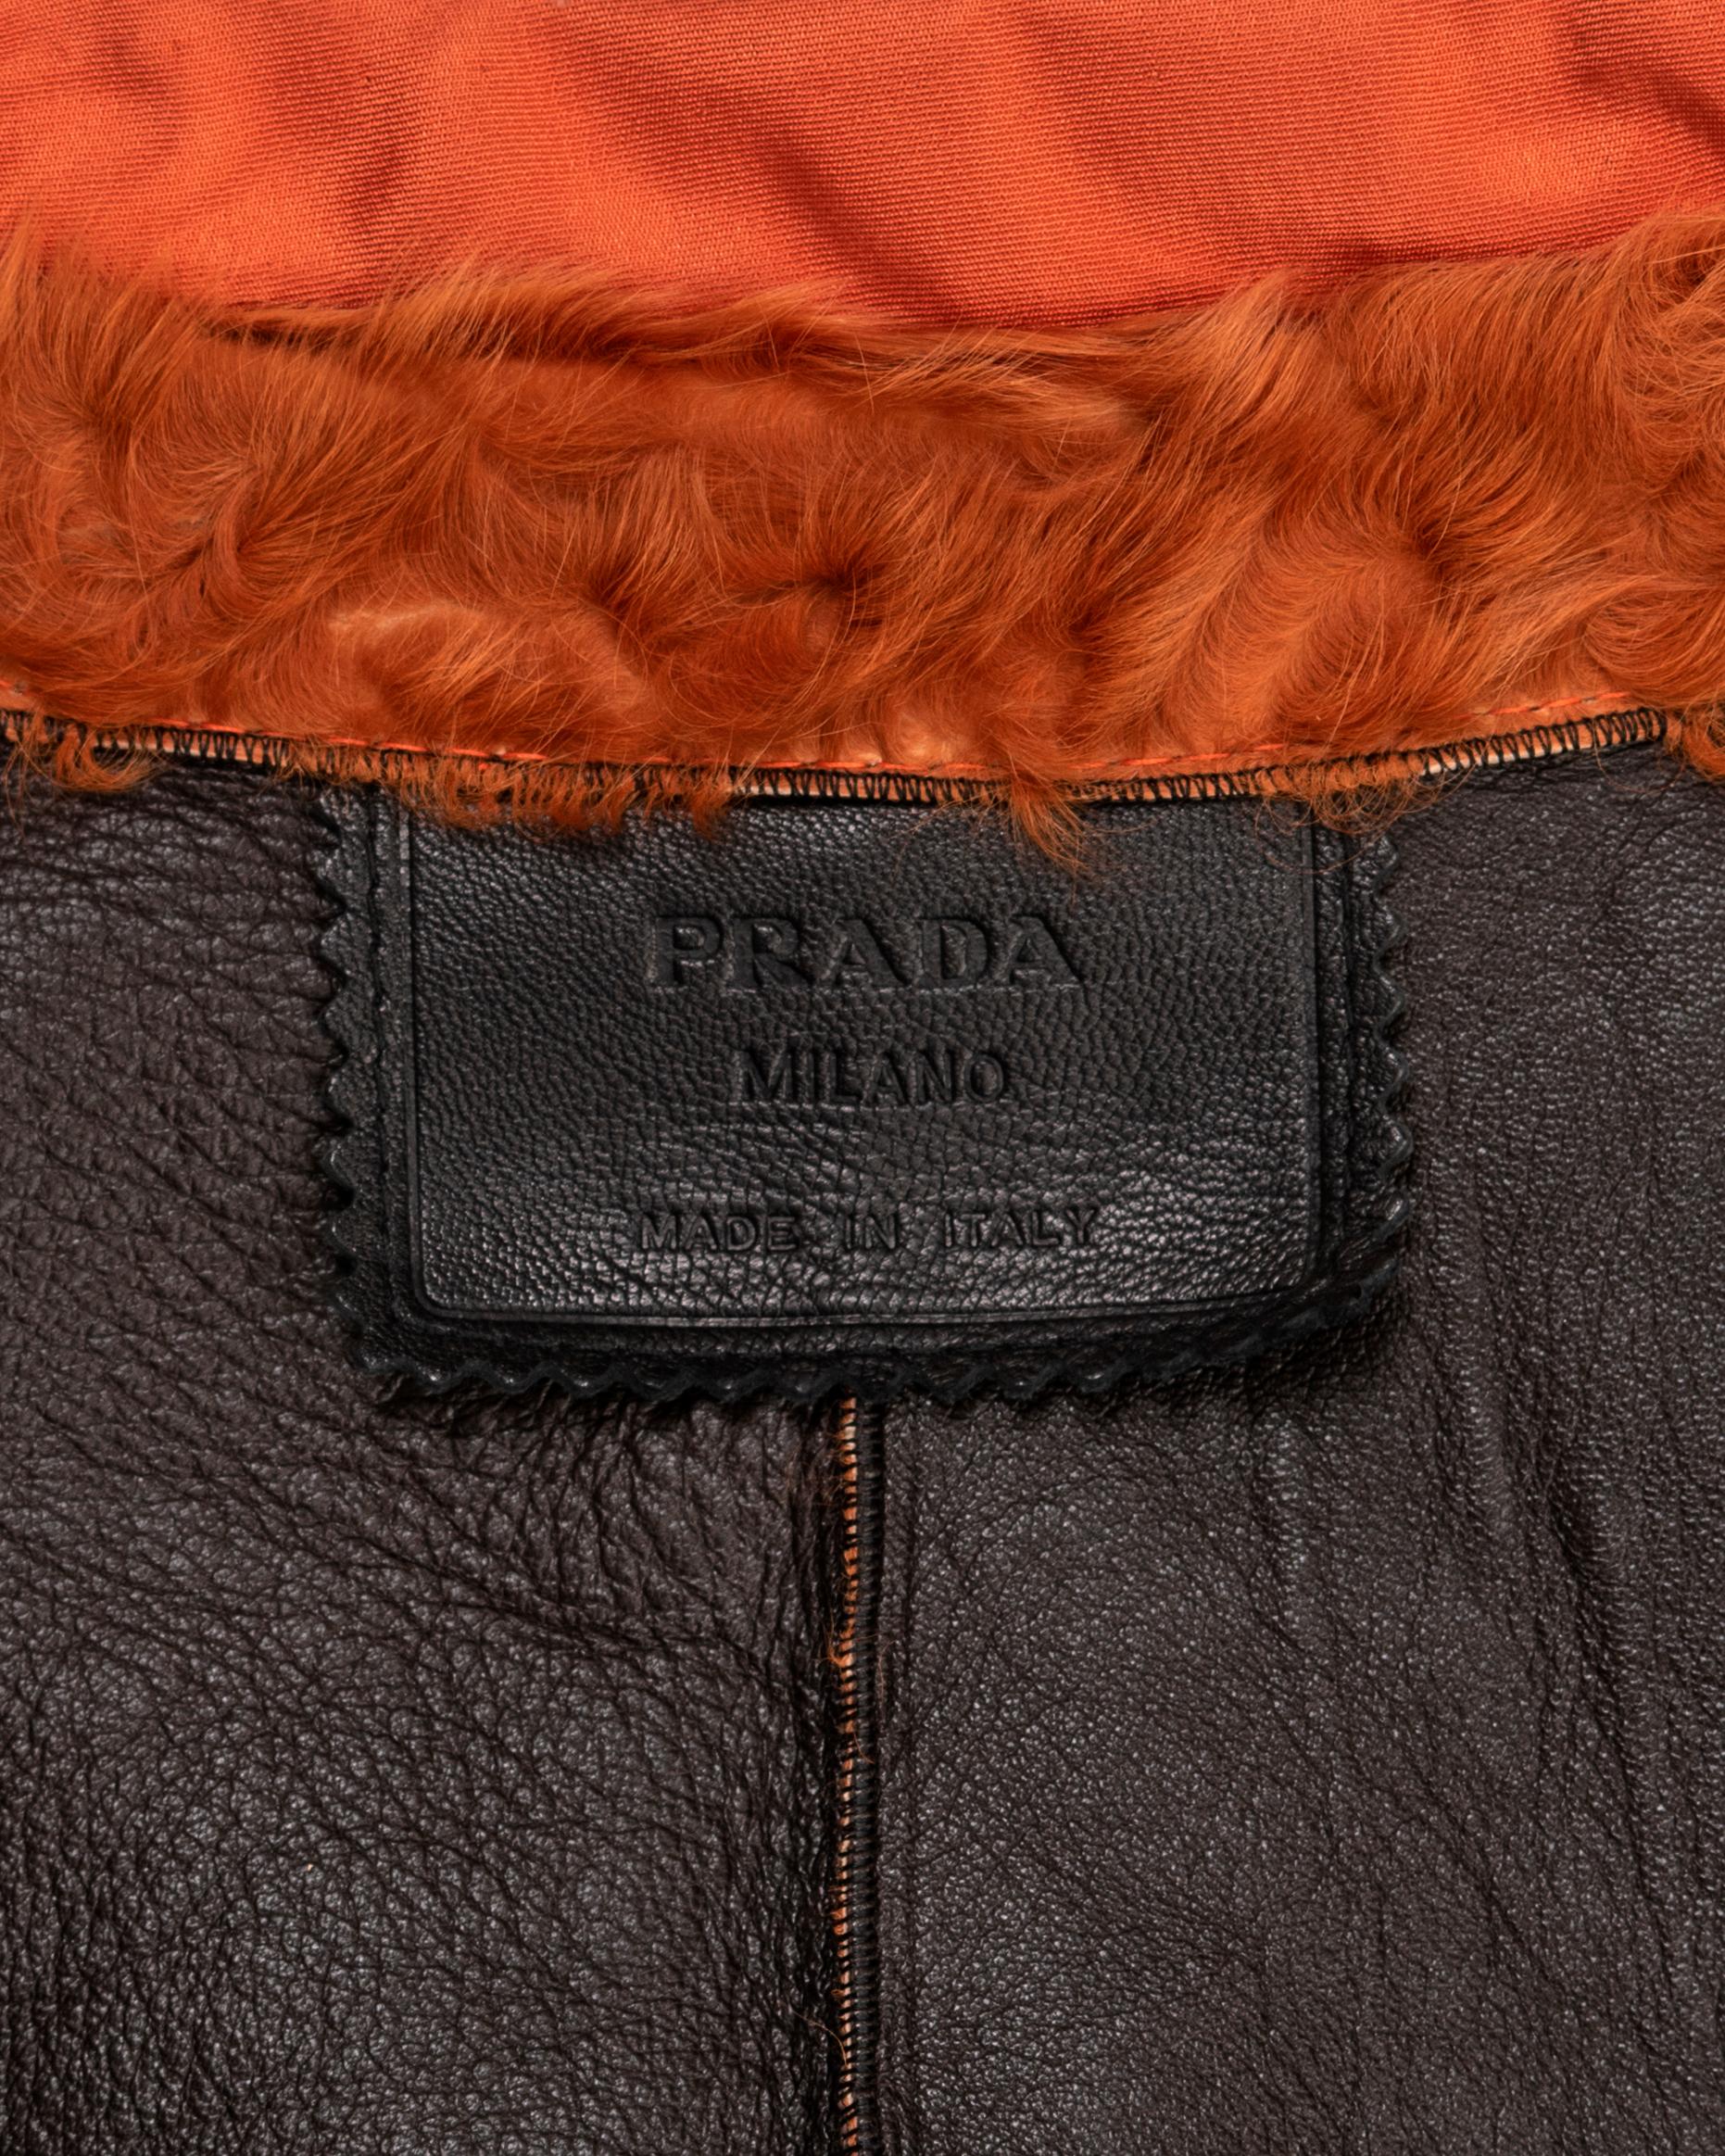 Prada orange curly shearling jacket, fw 1999 9